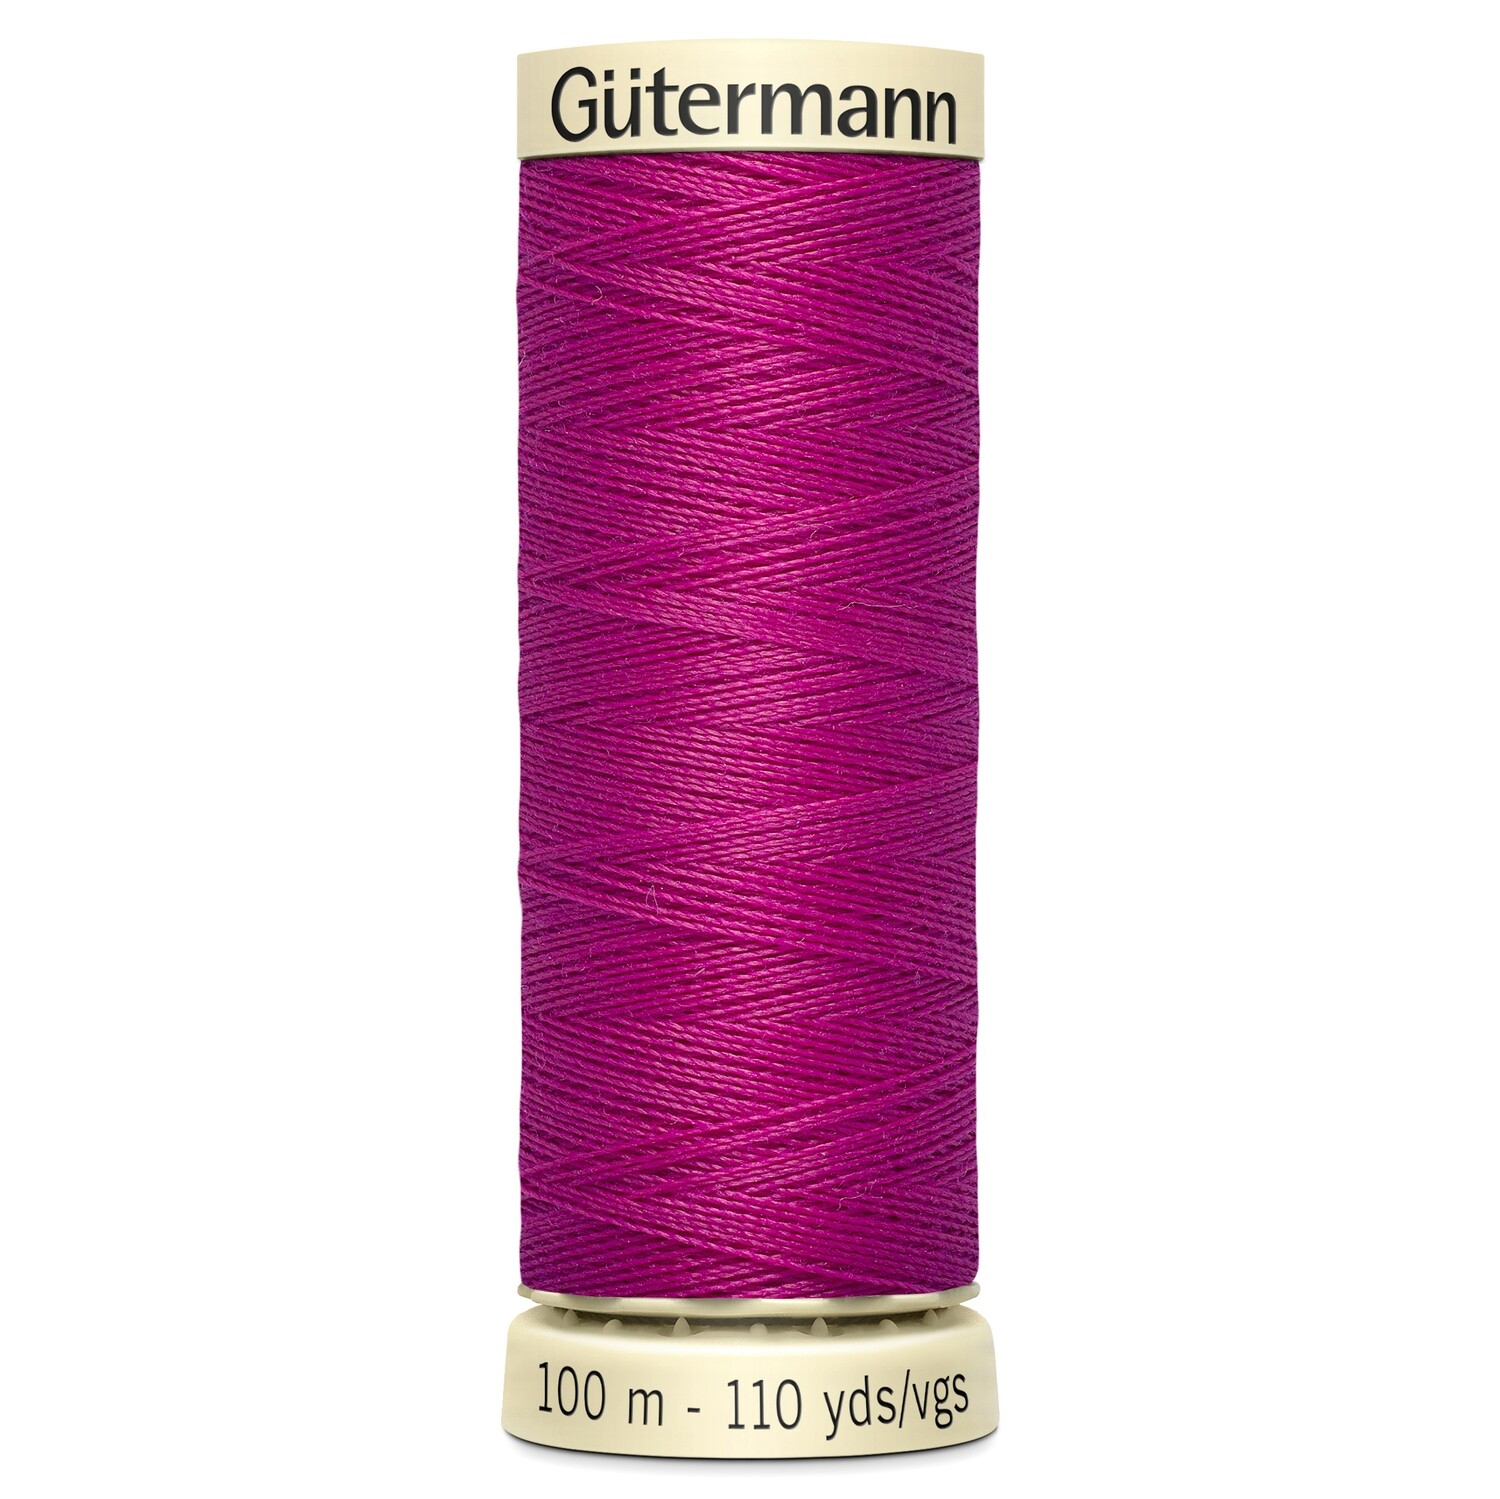 Gutermann Sew-All thread 877